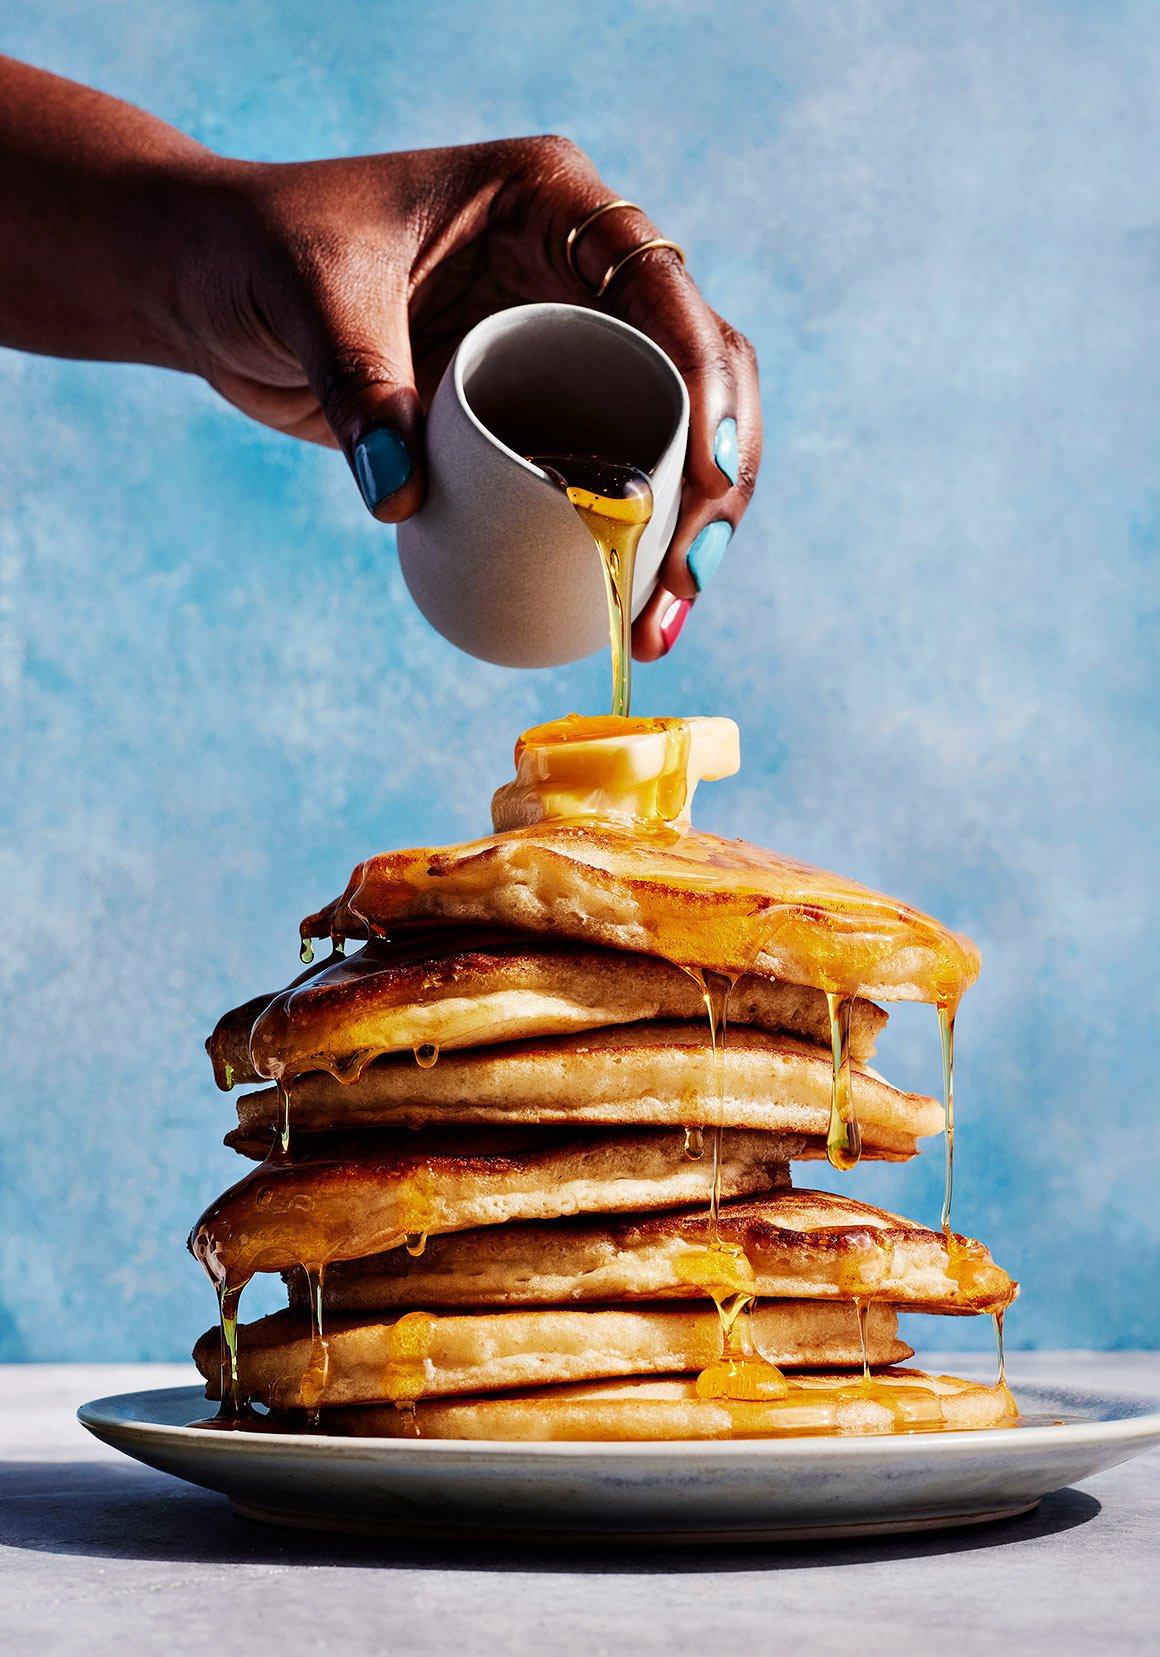 Kolenko-photographer-Shaq-Recipe-cookbook-Family-stlye-Pancakes-syrup-breakfast.jpg